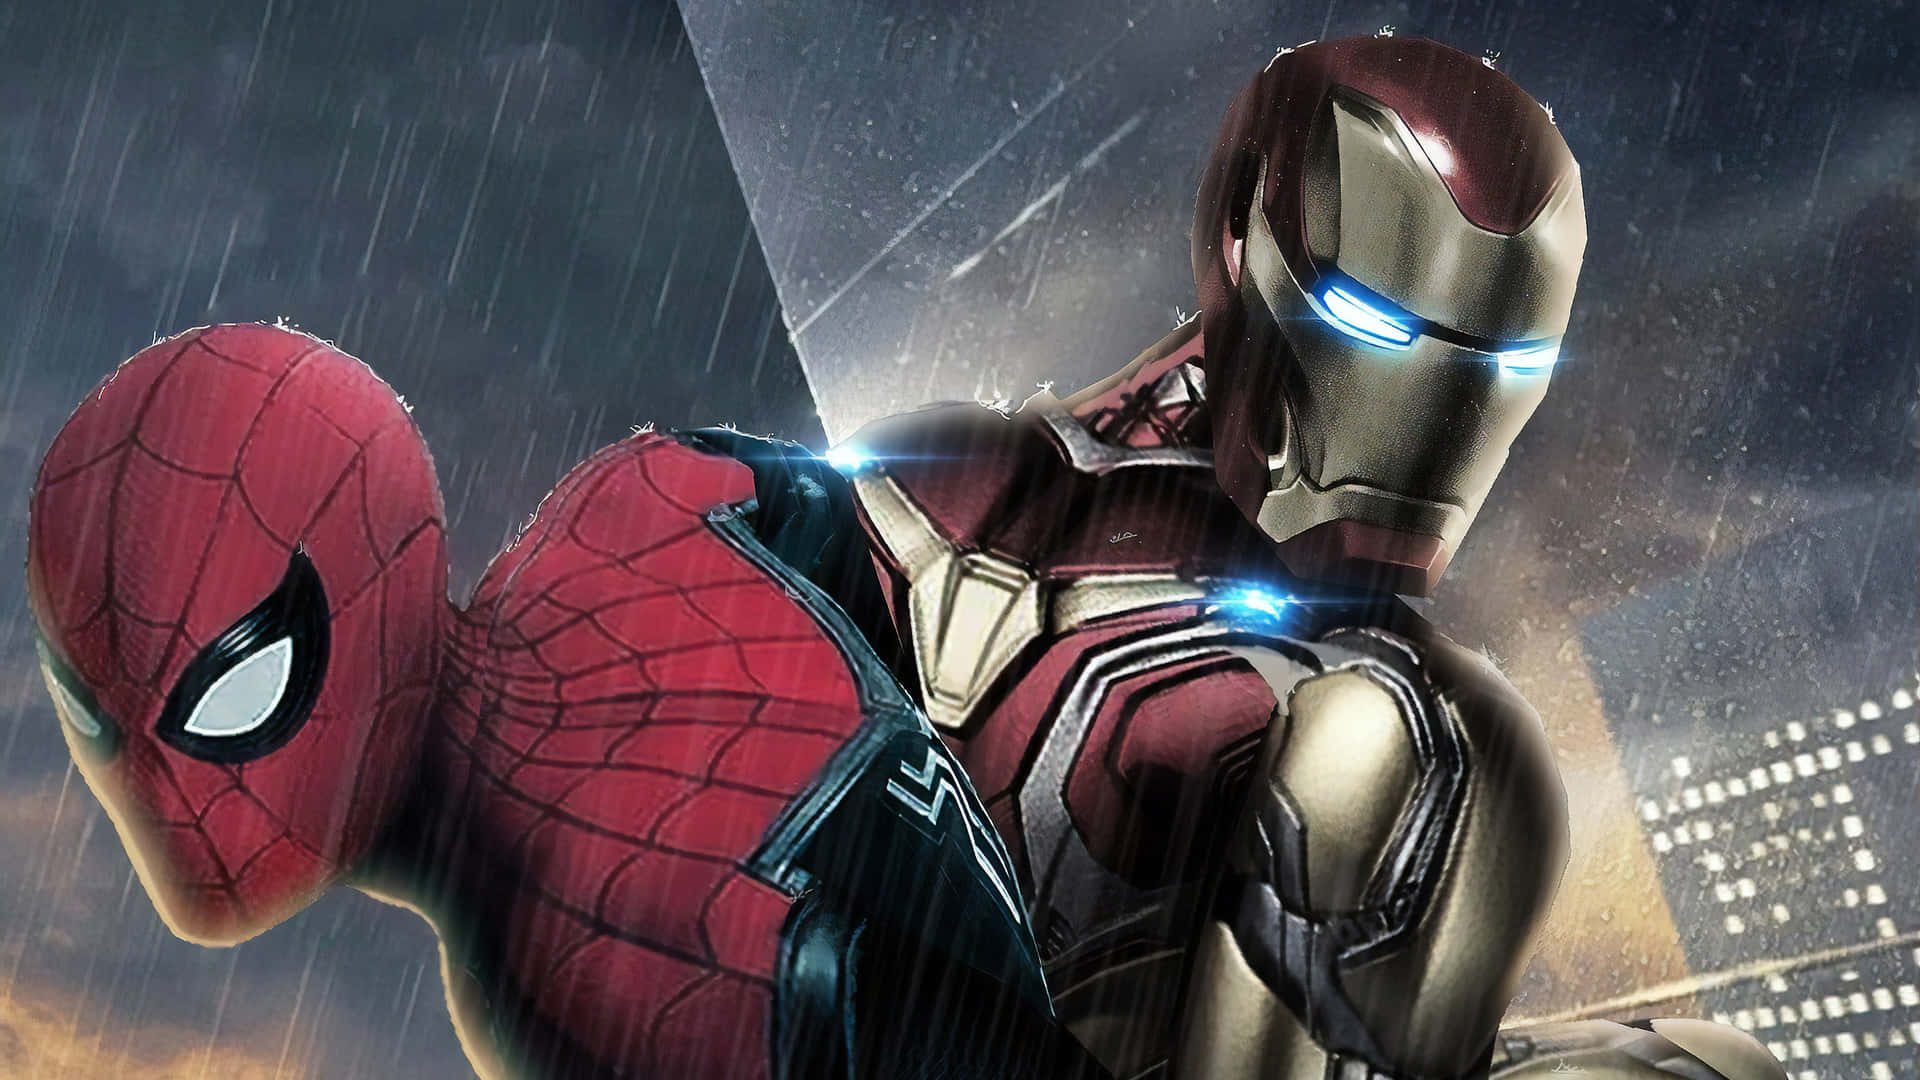 Superhelt duoen Spider Man og Iron Man beskytter byen sammen. Wallpaper